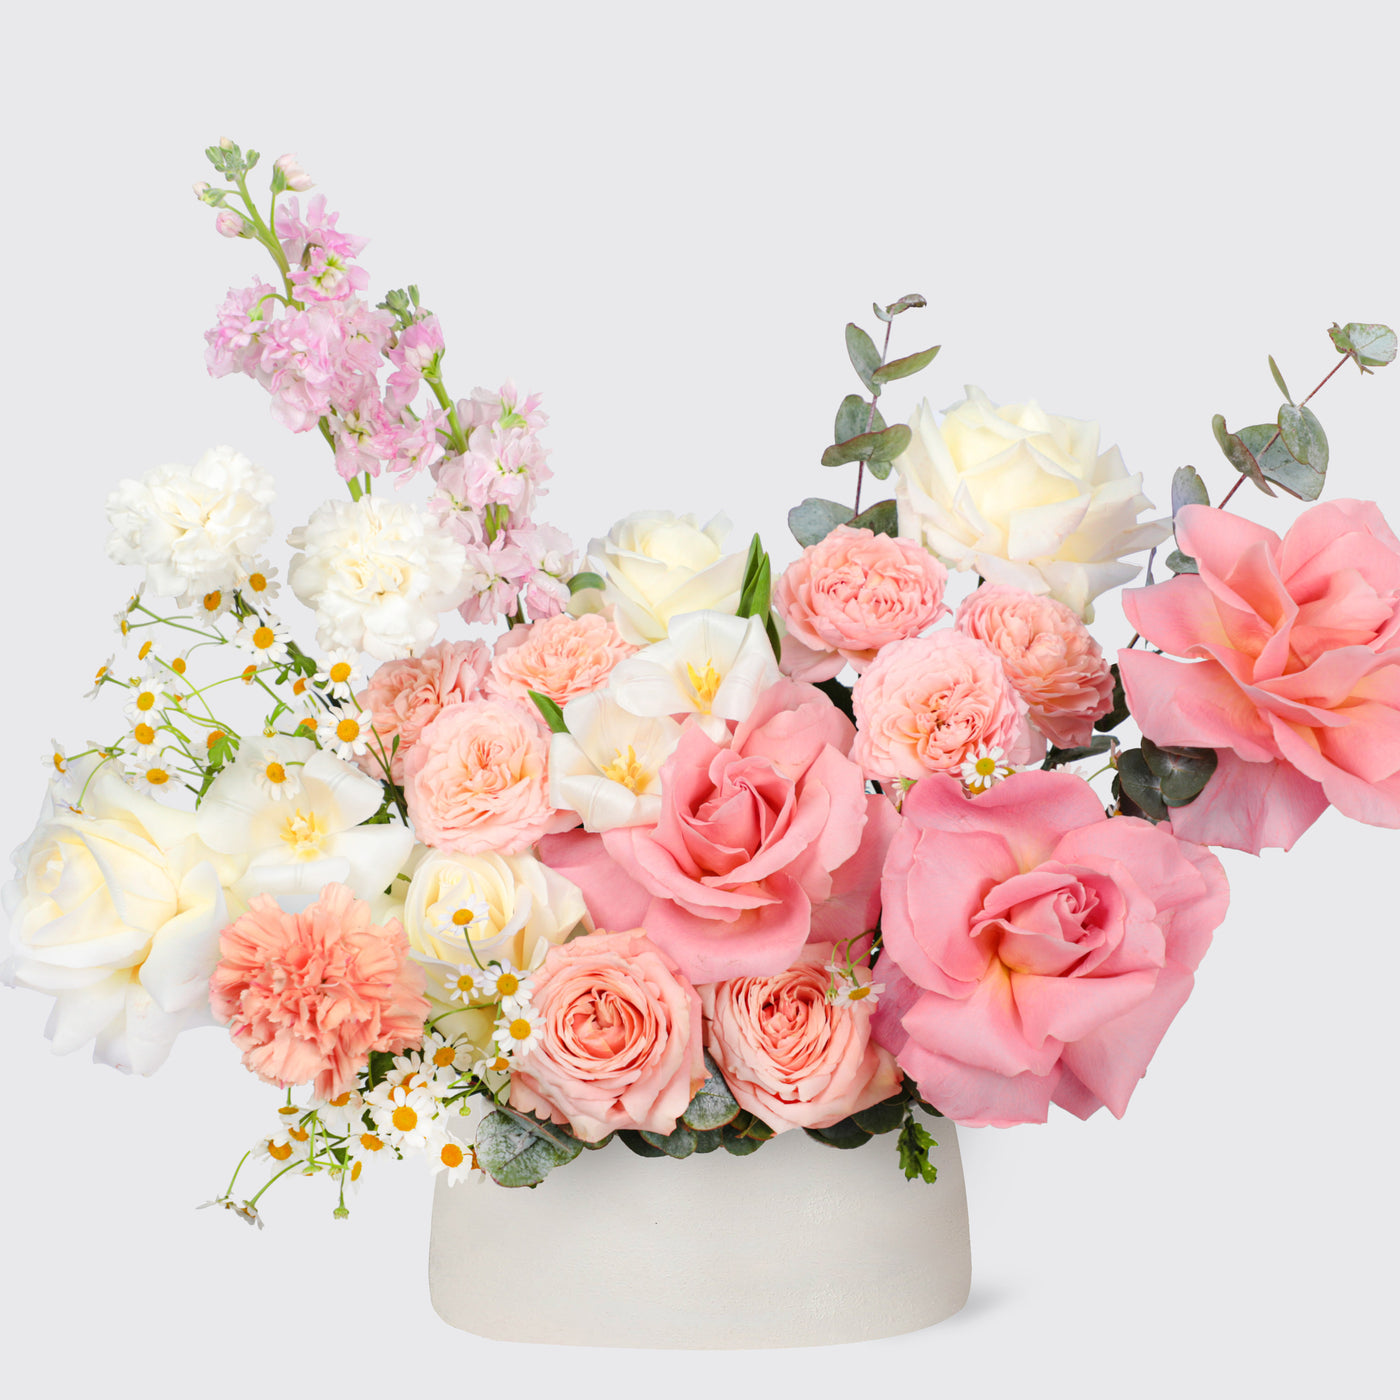 Graceful Bloom in Vase